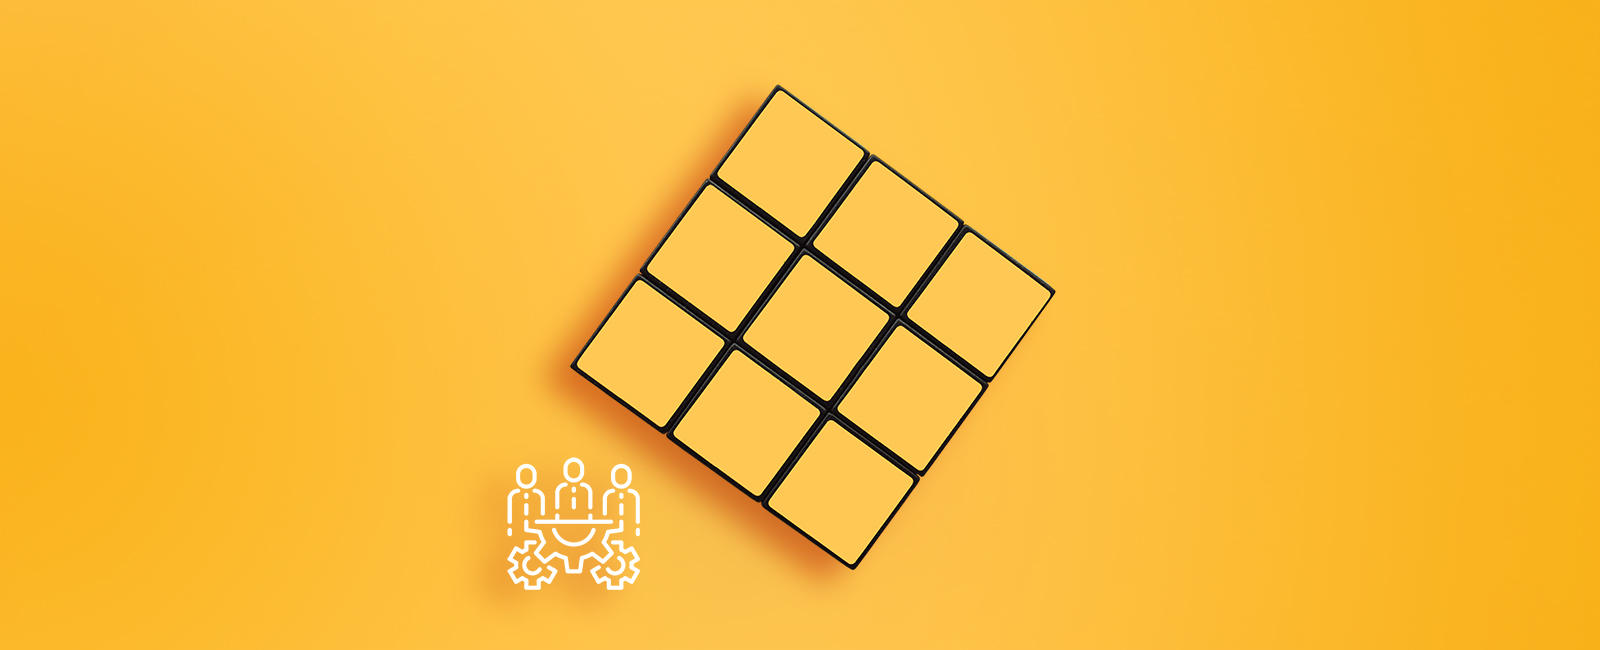 yellow rubics cube